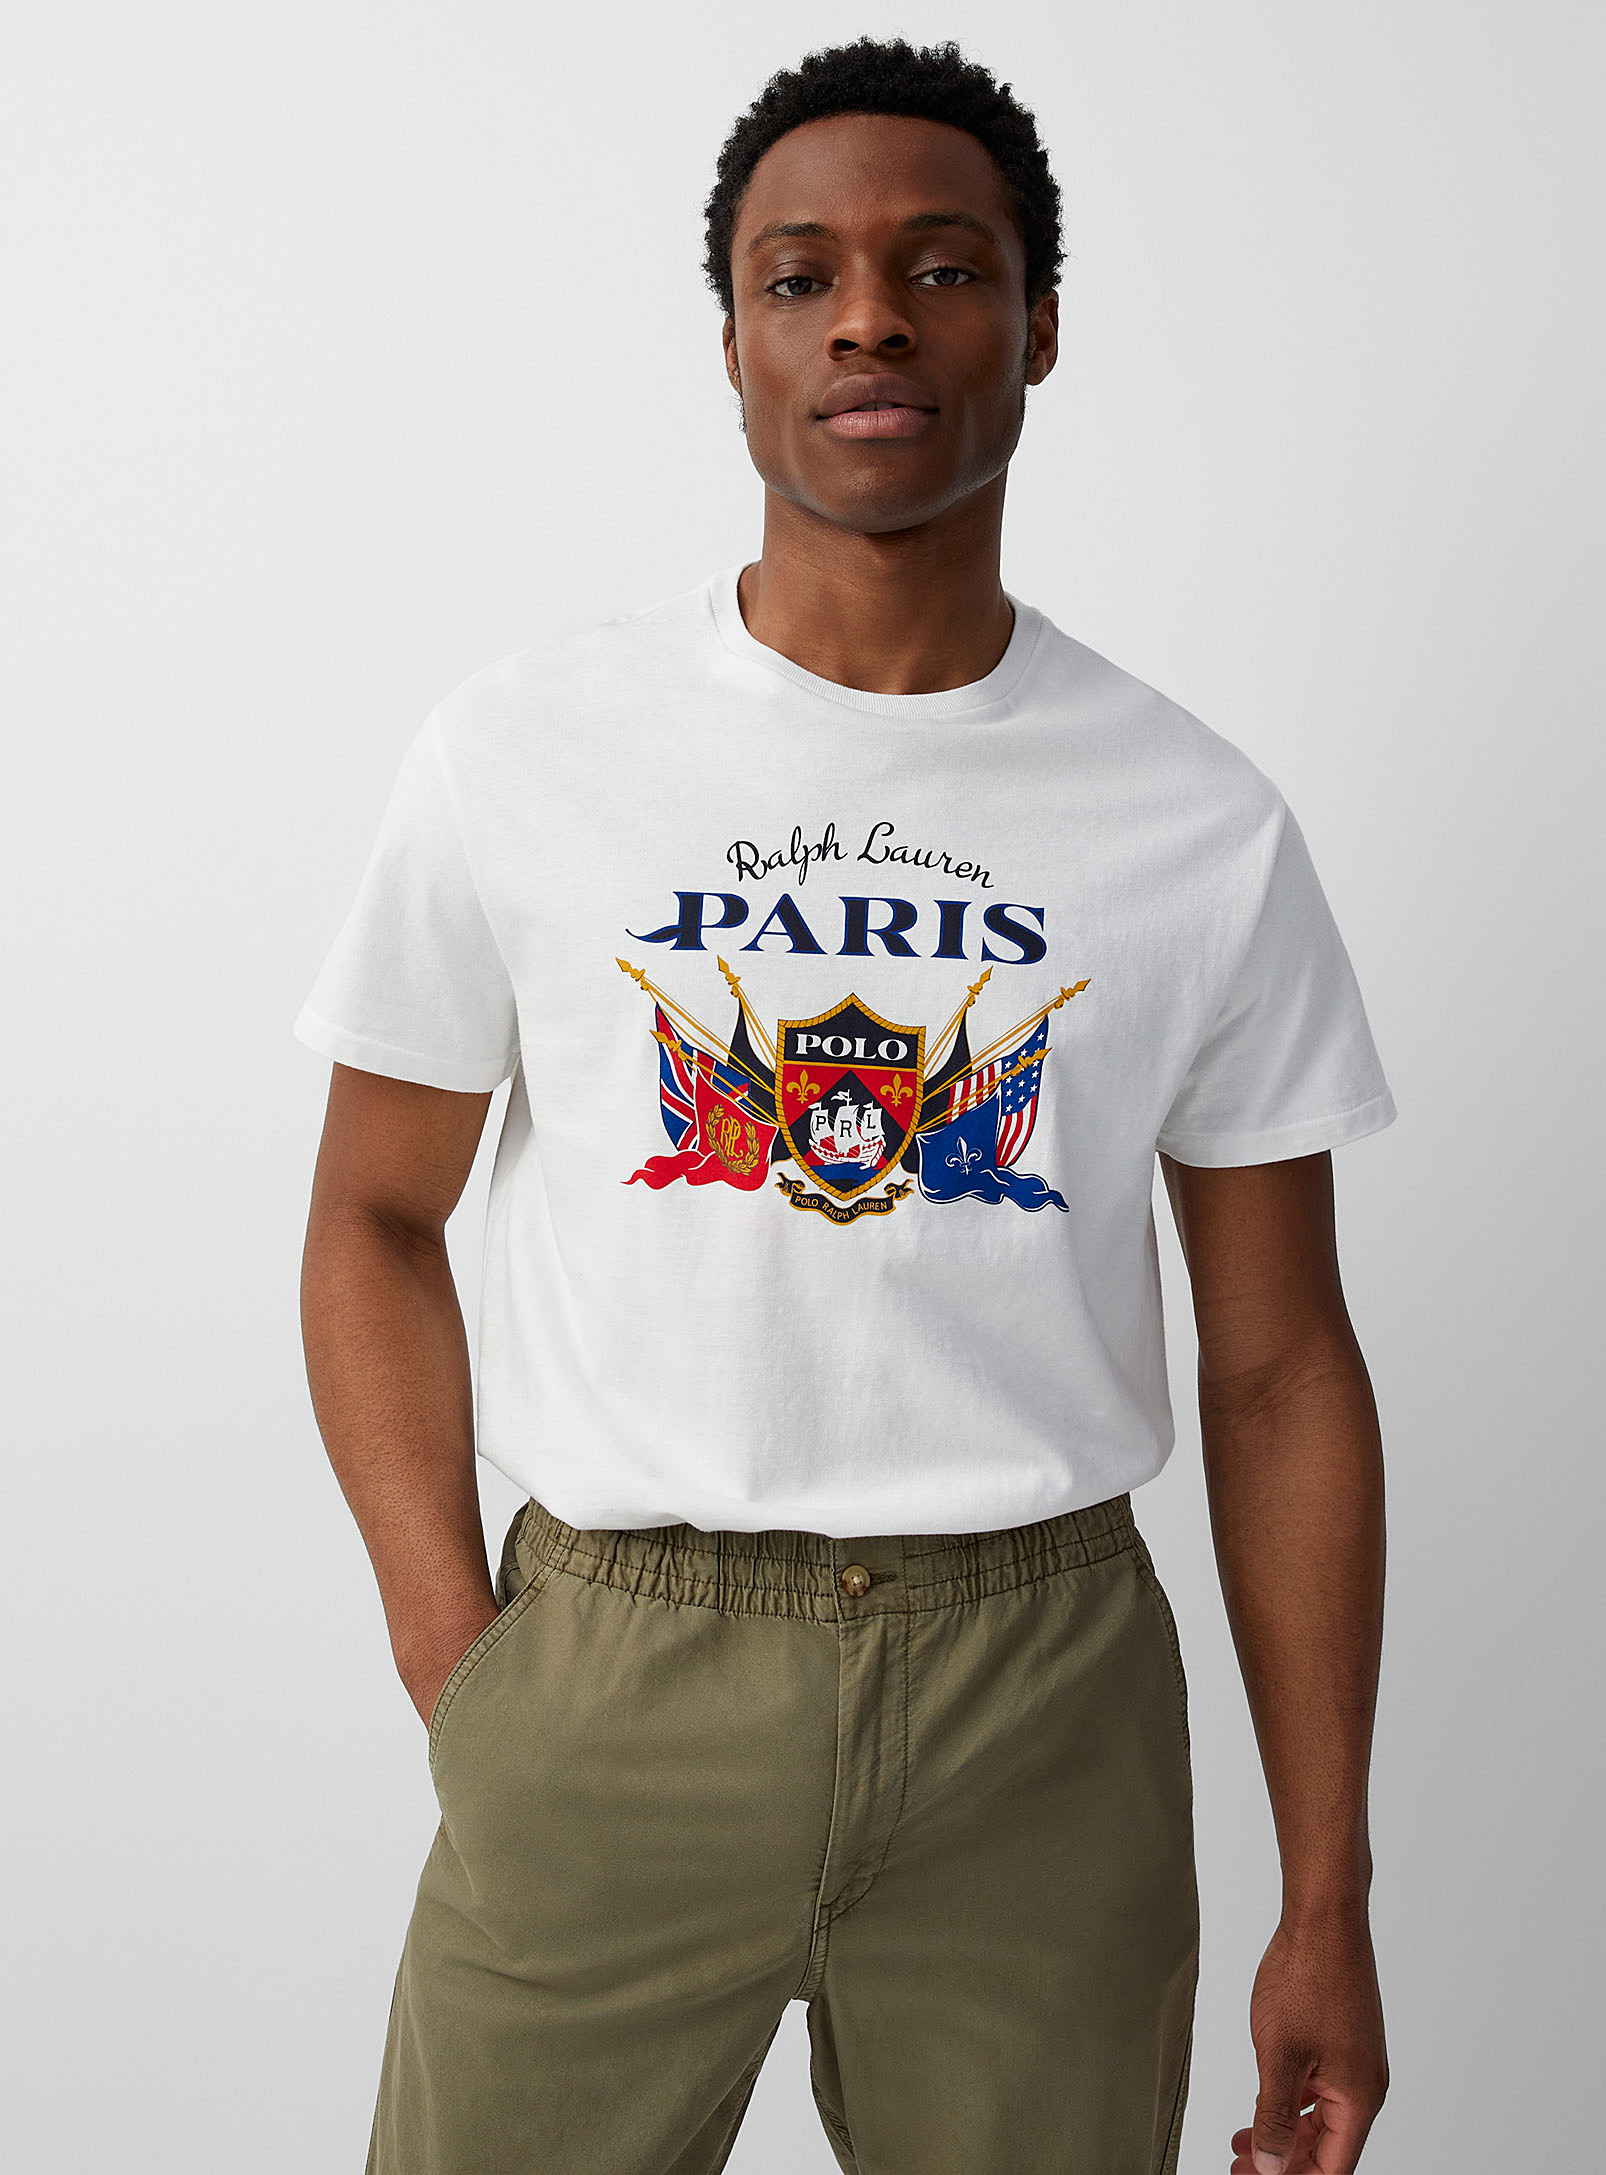 Polo Ralph Lauren - Le t-shirt armoiries Paris